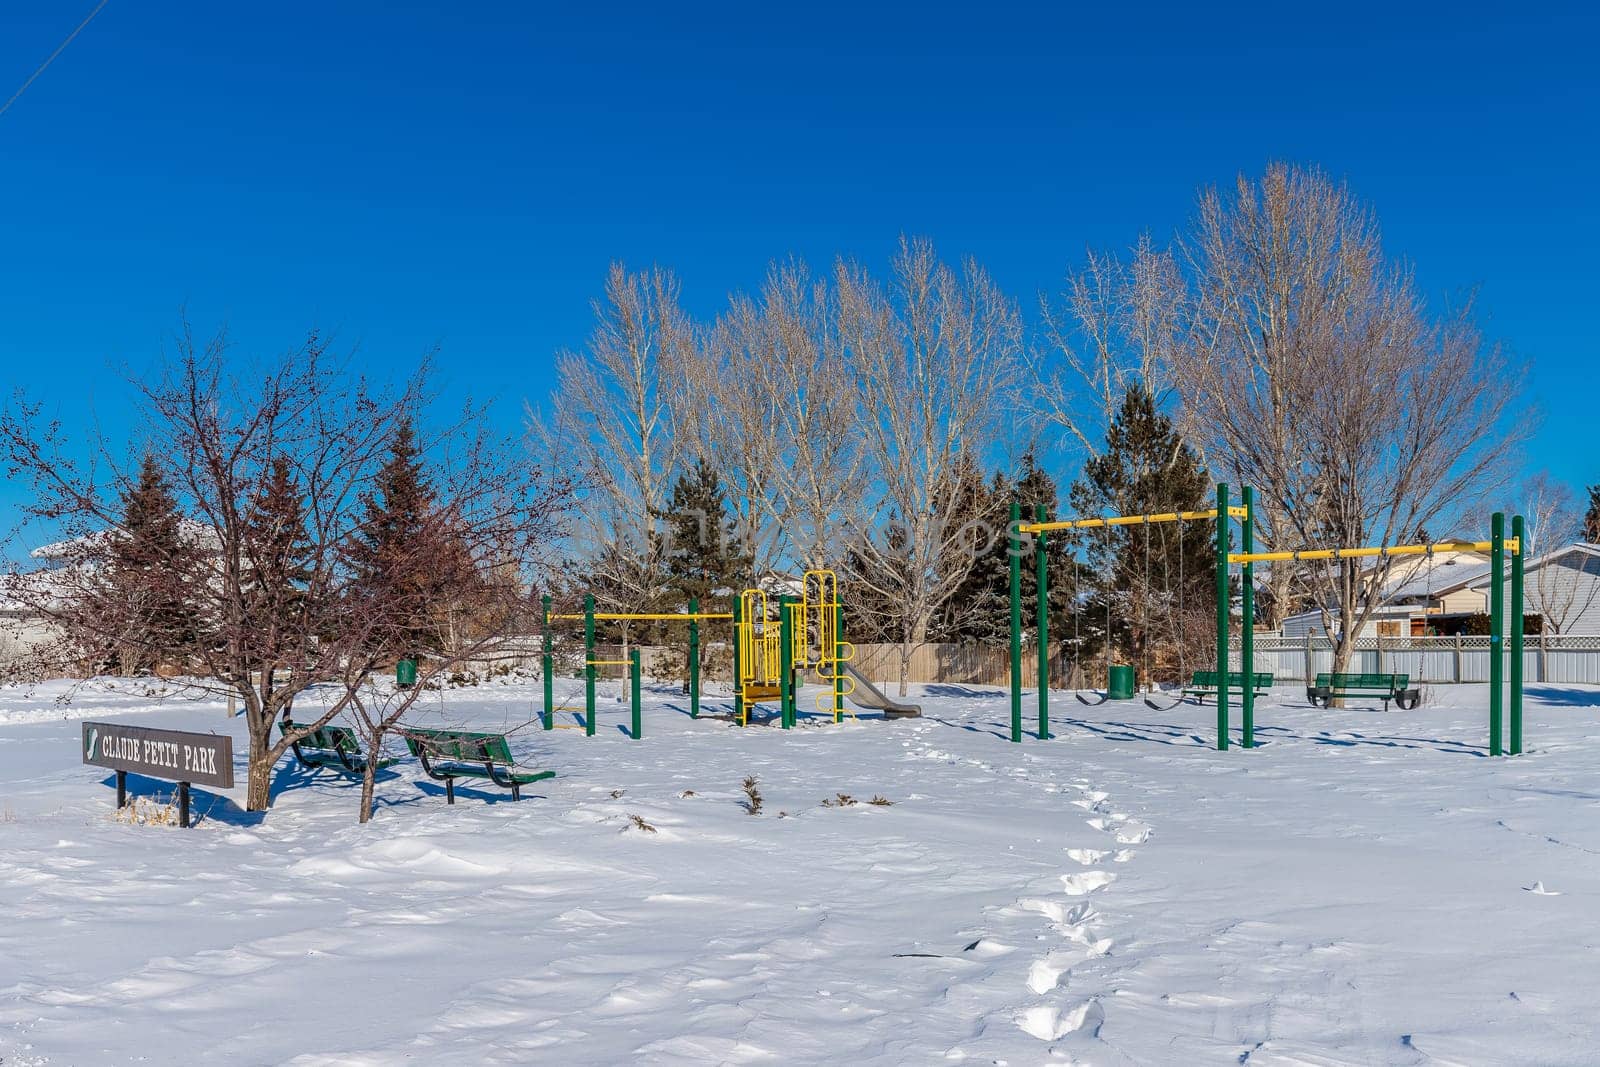 Claude Petit Park is located in the Dundonald neighborhood of Saskatoon.